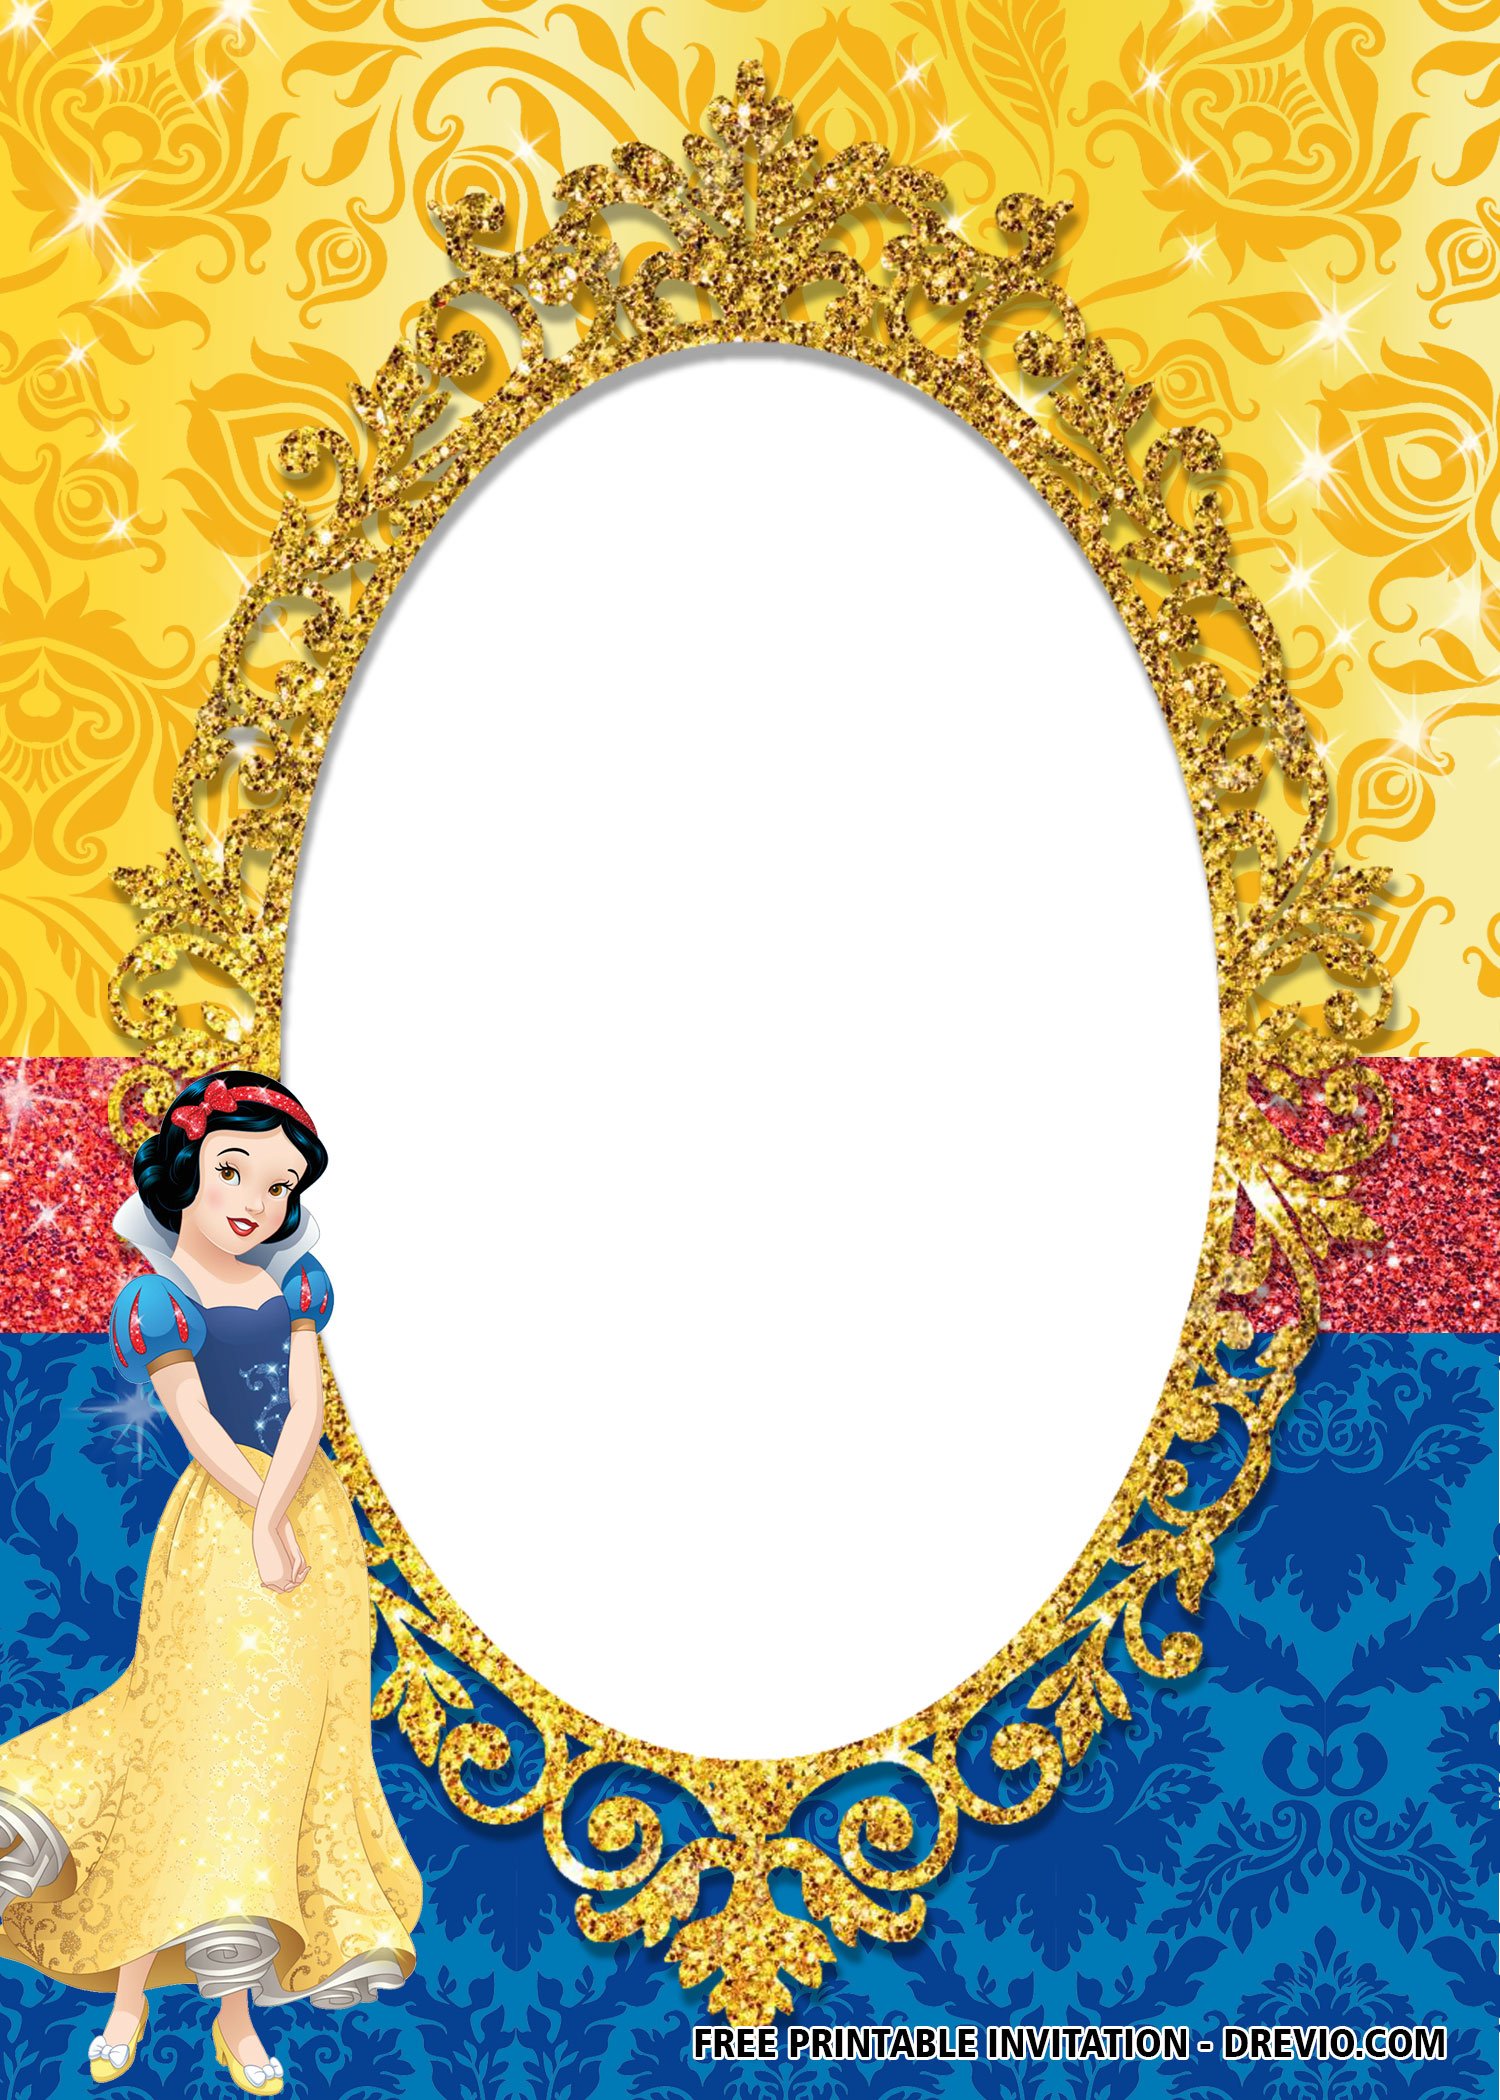 FREE Princess Snow White Invitation Templates Download Hundreds FREE PRINTABLE Birthday